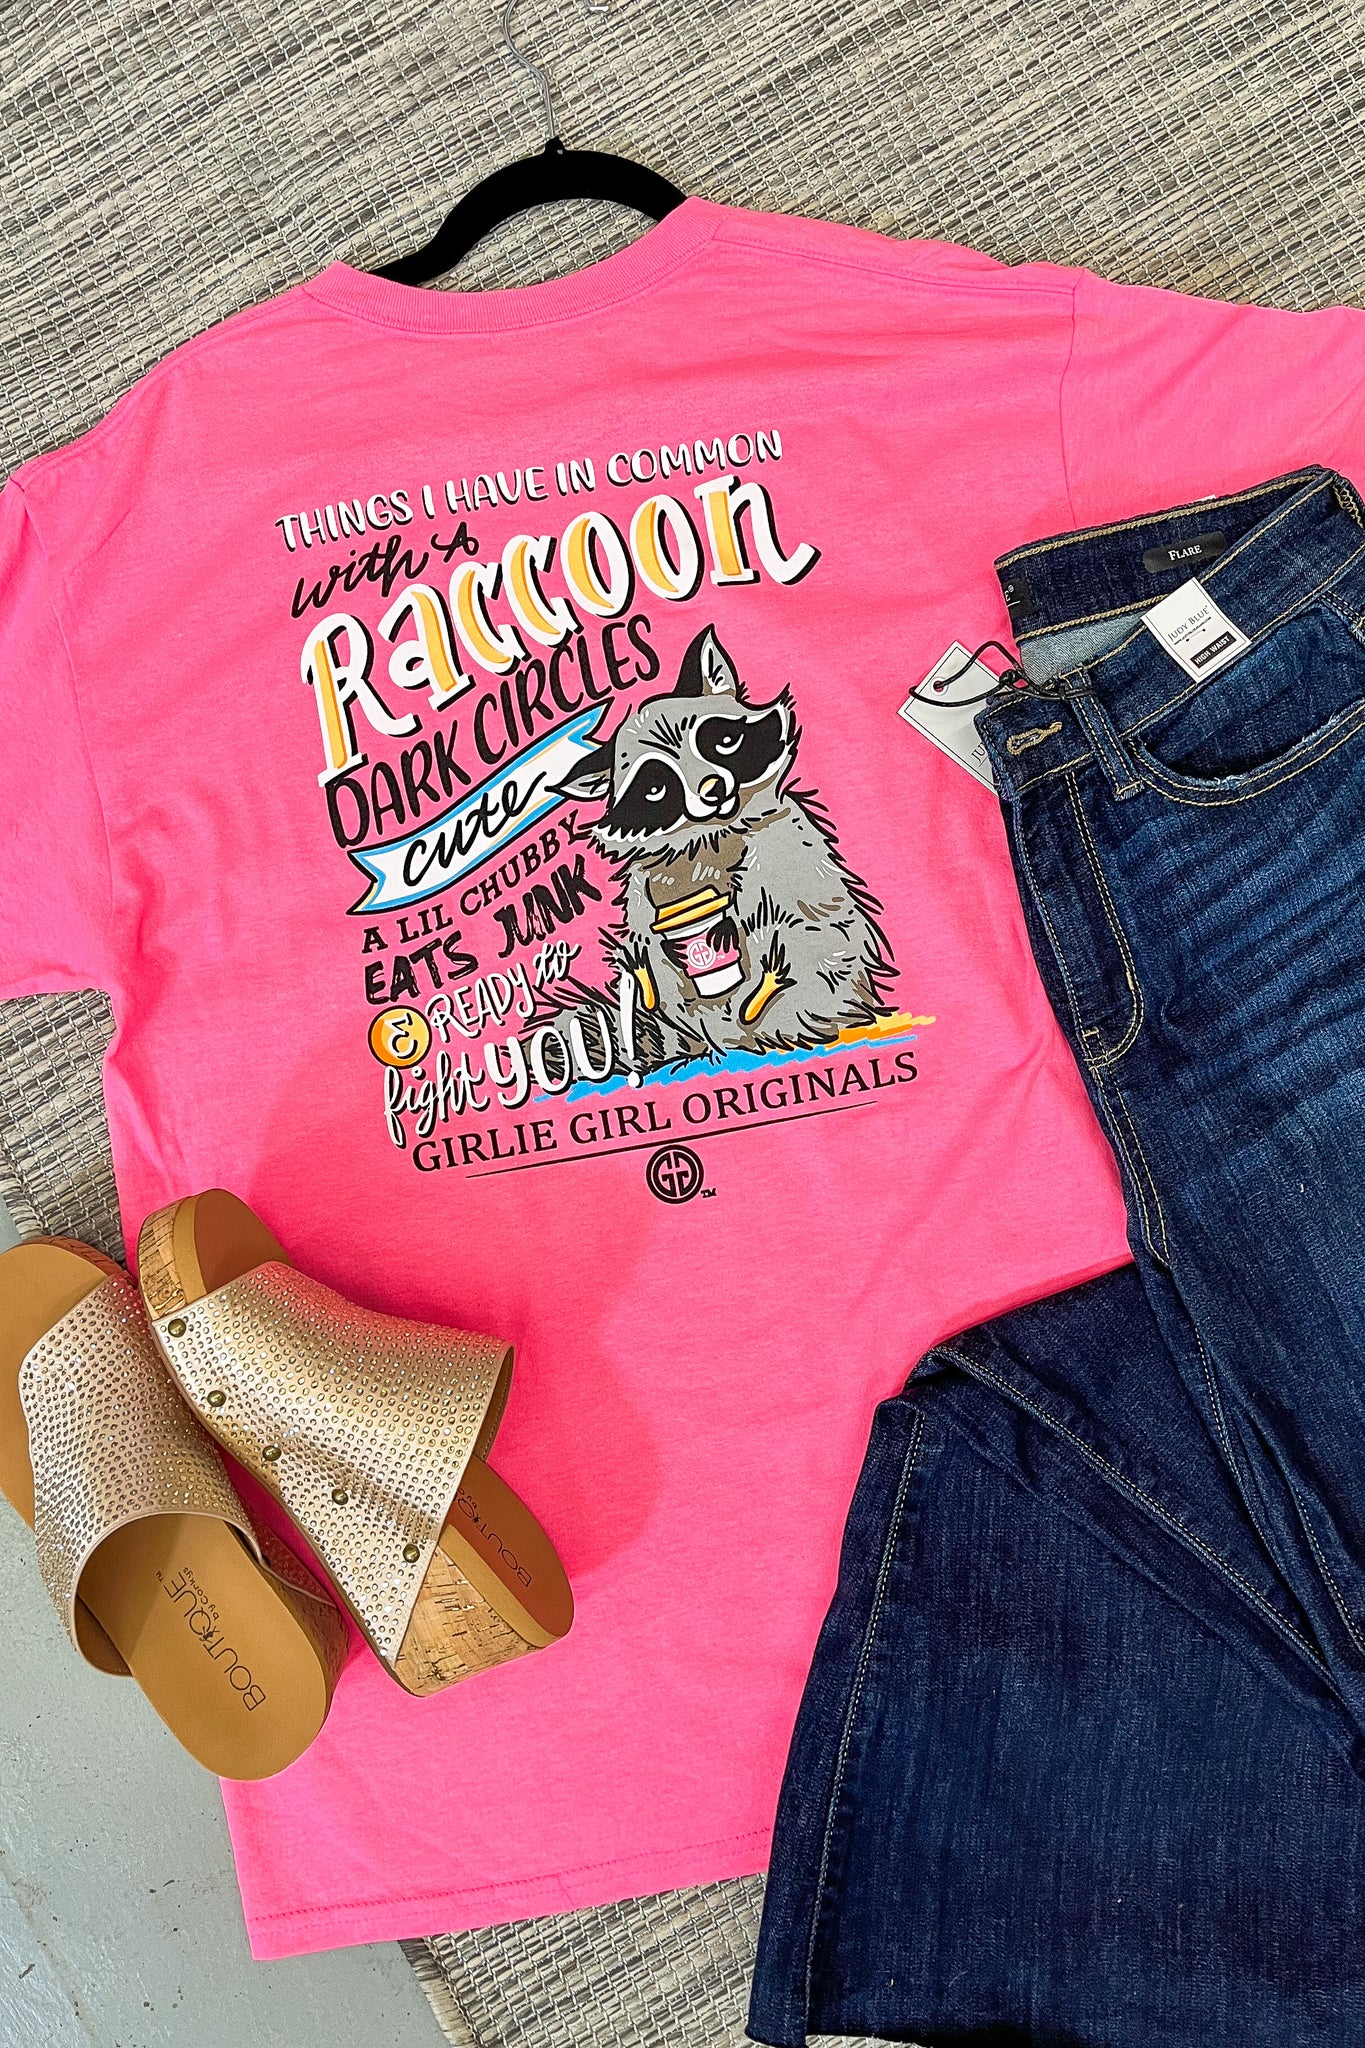 Common Raccoon Graphic T-Shirt, Neon Pink